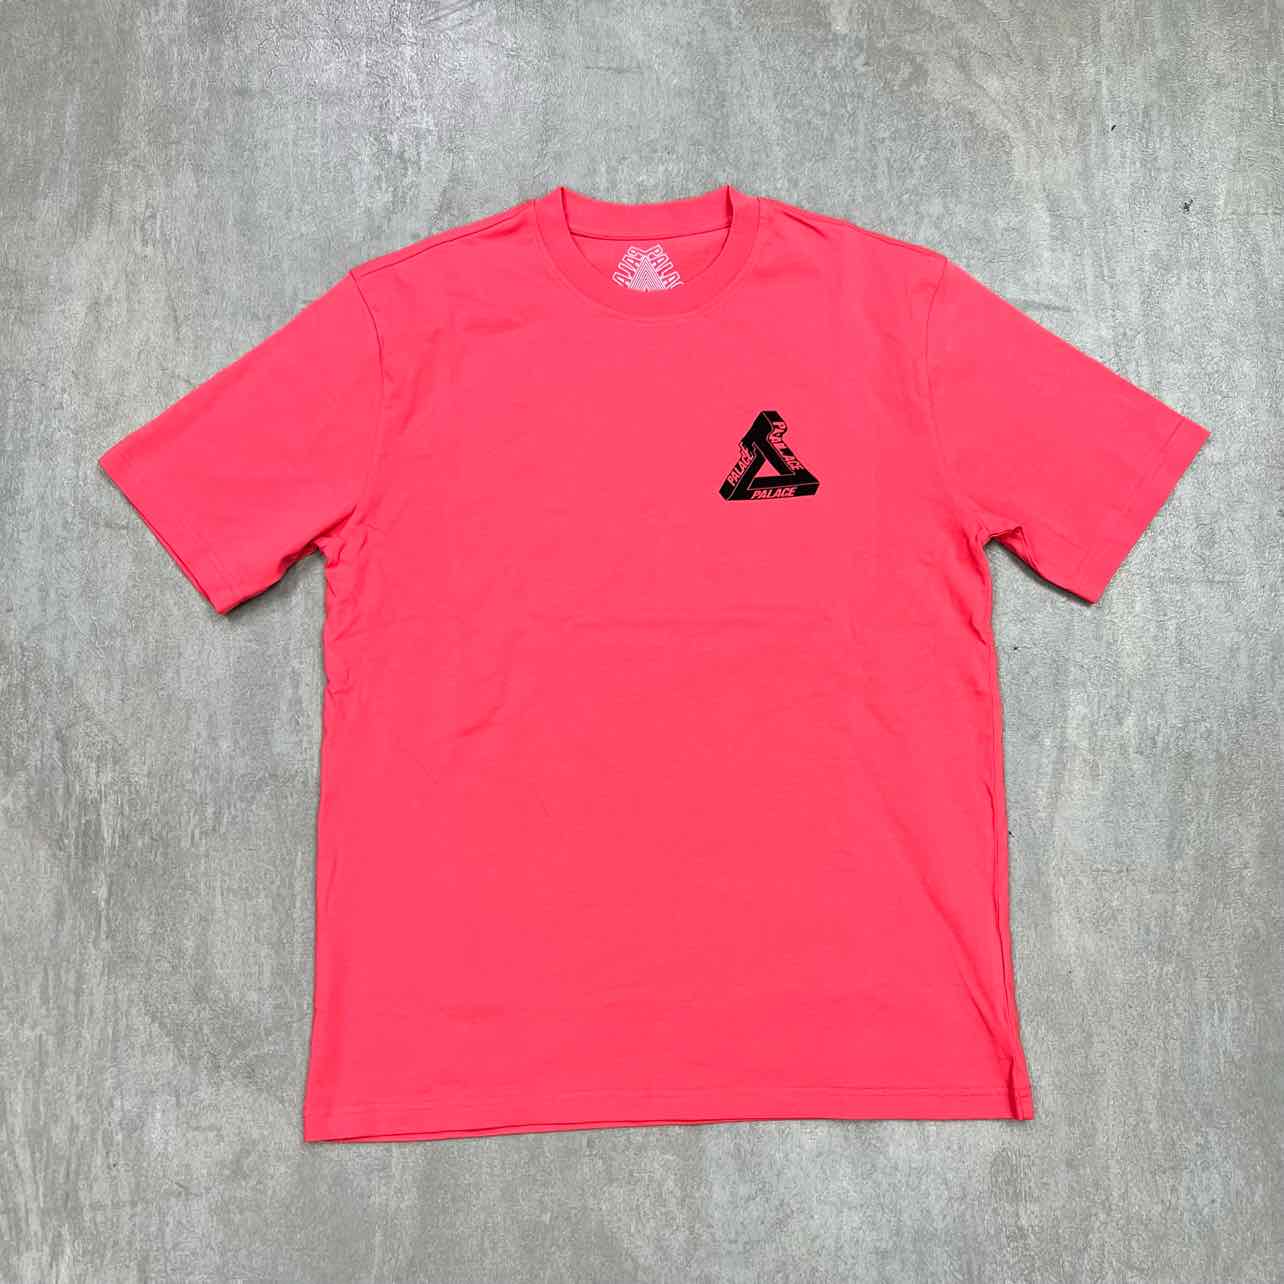 Palace T-Shirt "TRI WOBBLE" Light Red New Size L